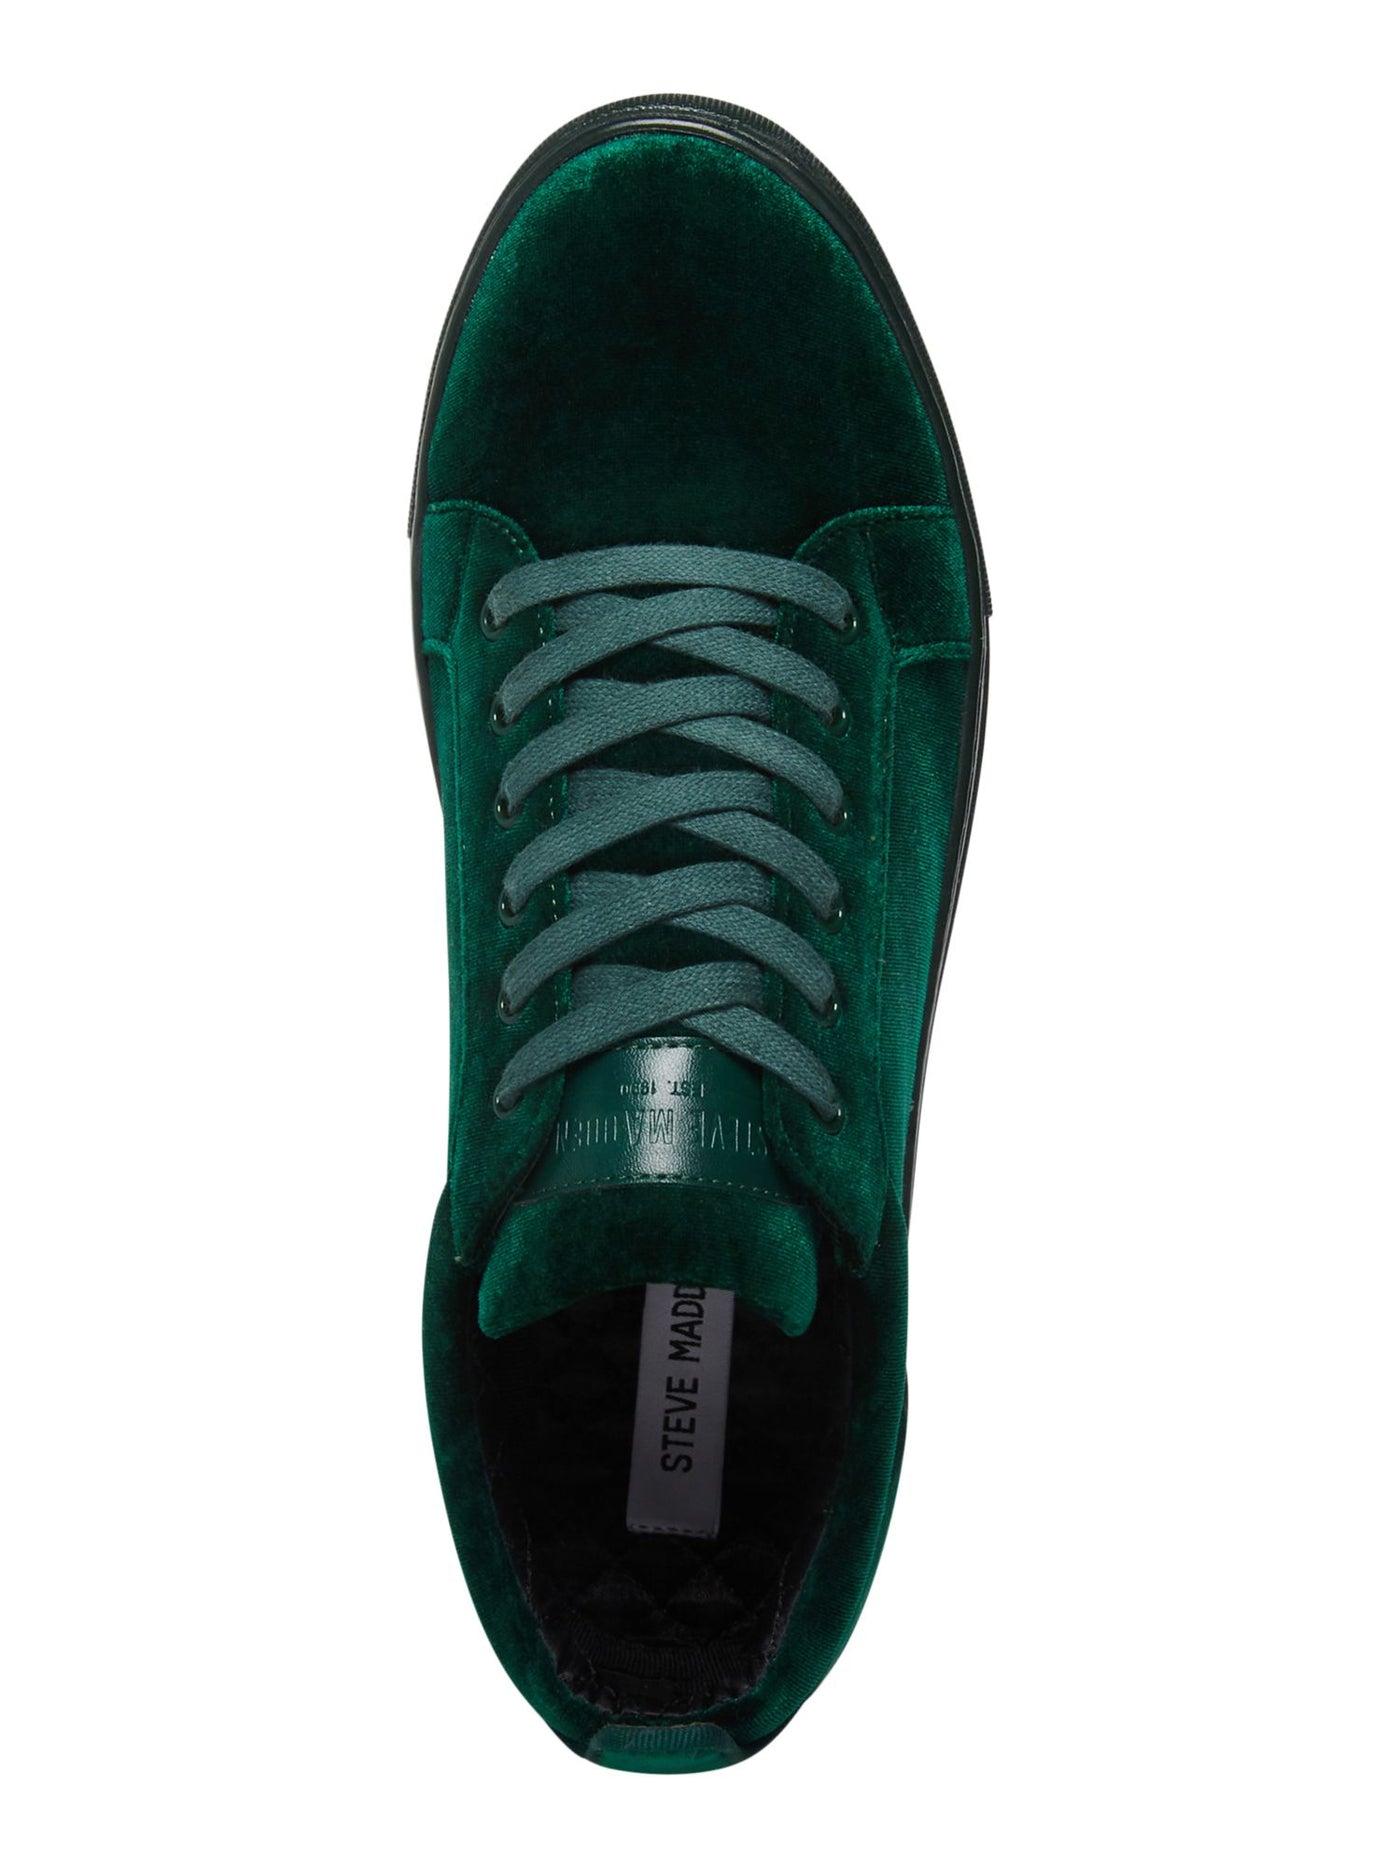 STEVE MADDEN Mens Green Heel Pull Tab Yazi Round Toe Lace-Up Velvet Sneakers Shoes 8